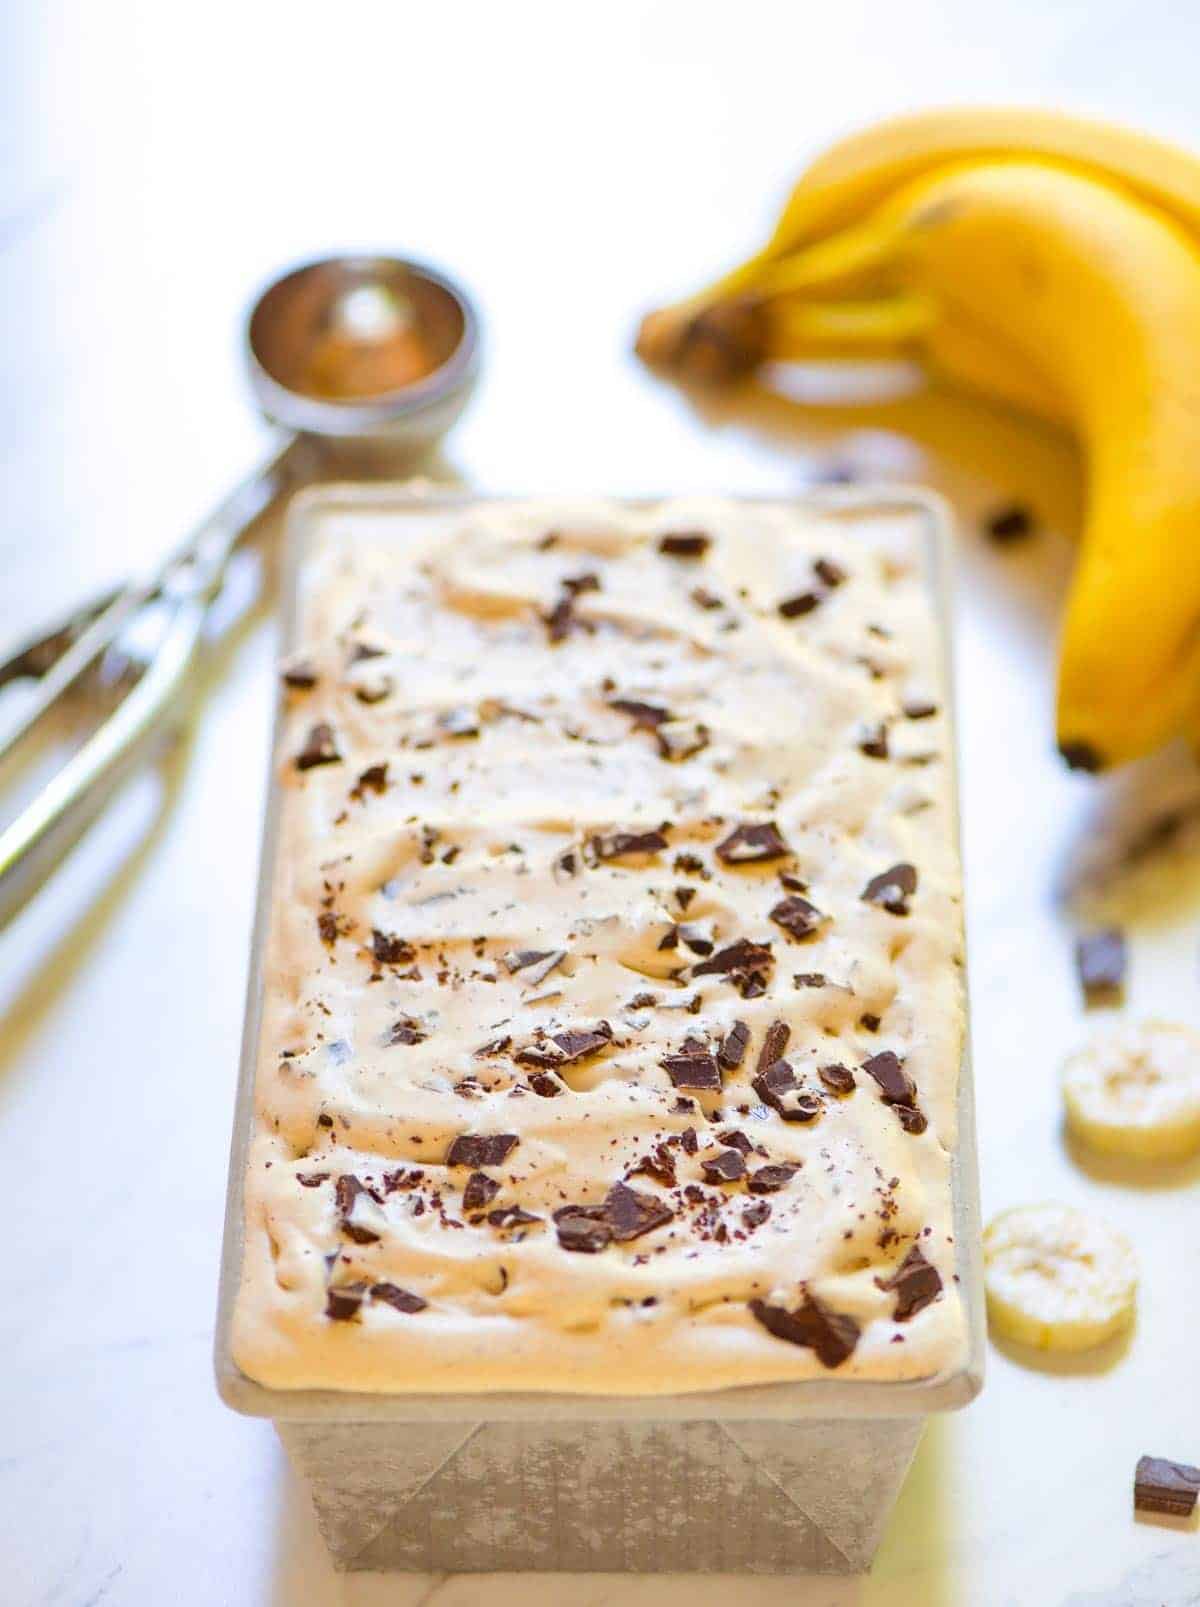 Homemade banana ice cream with shave chocolate